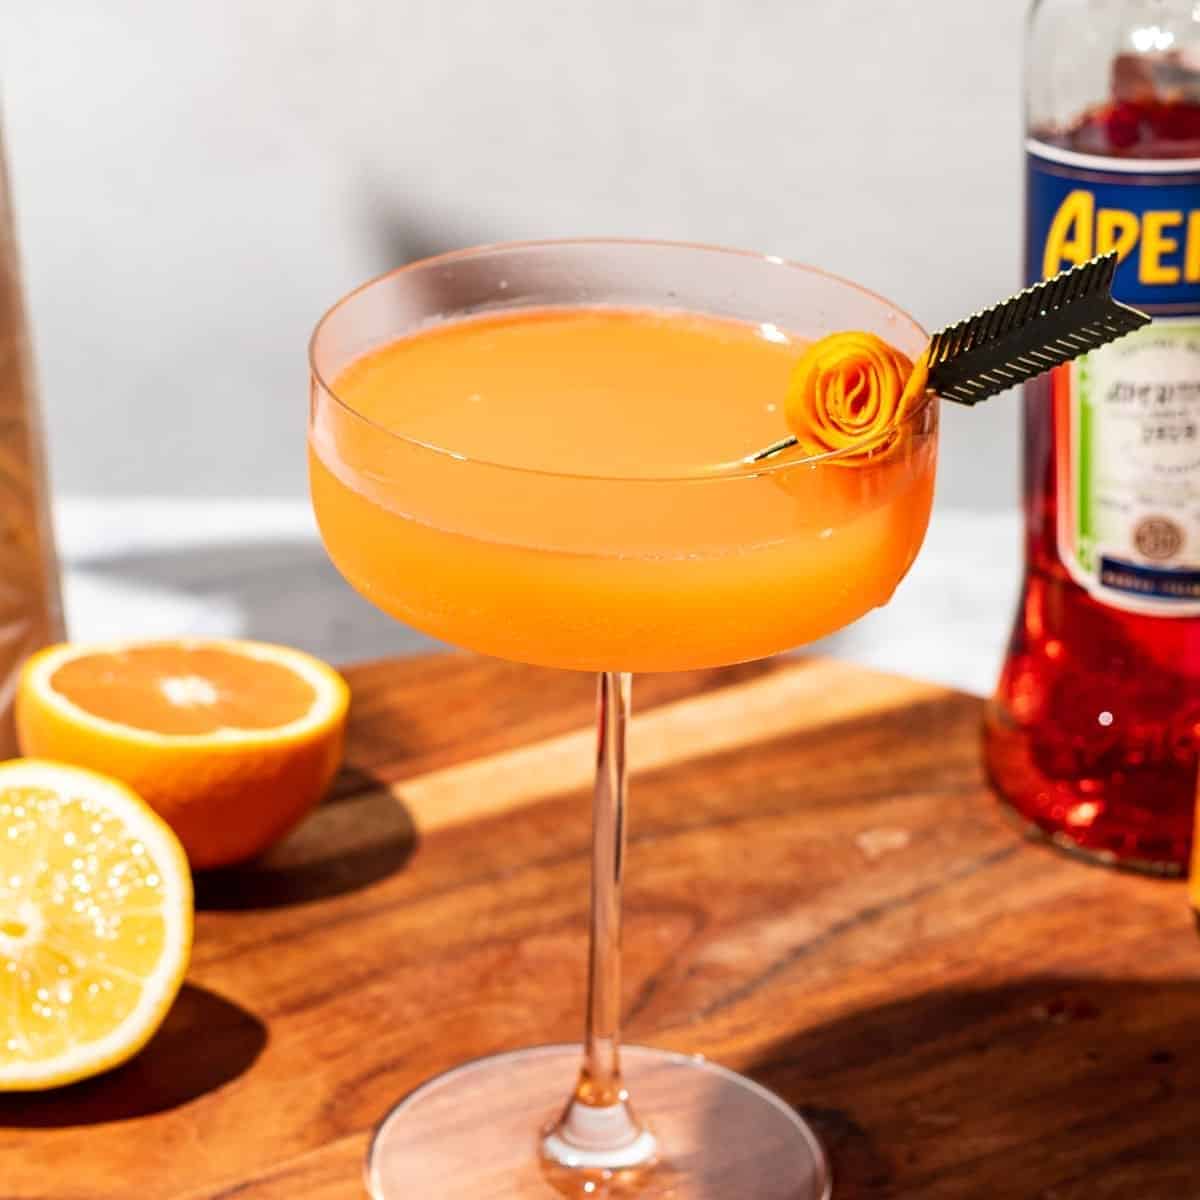 61 - aperol-martini-cocktail-featured-martini-recipes